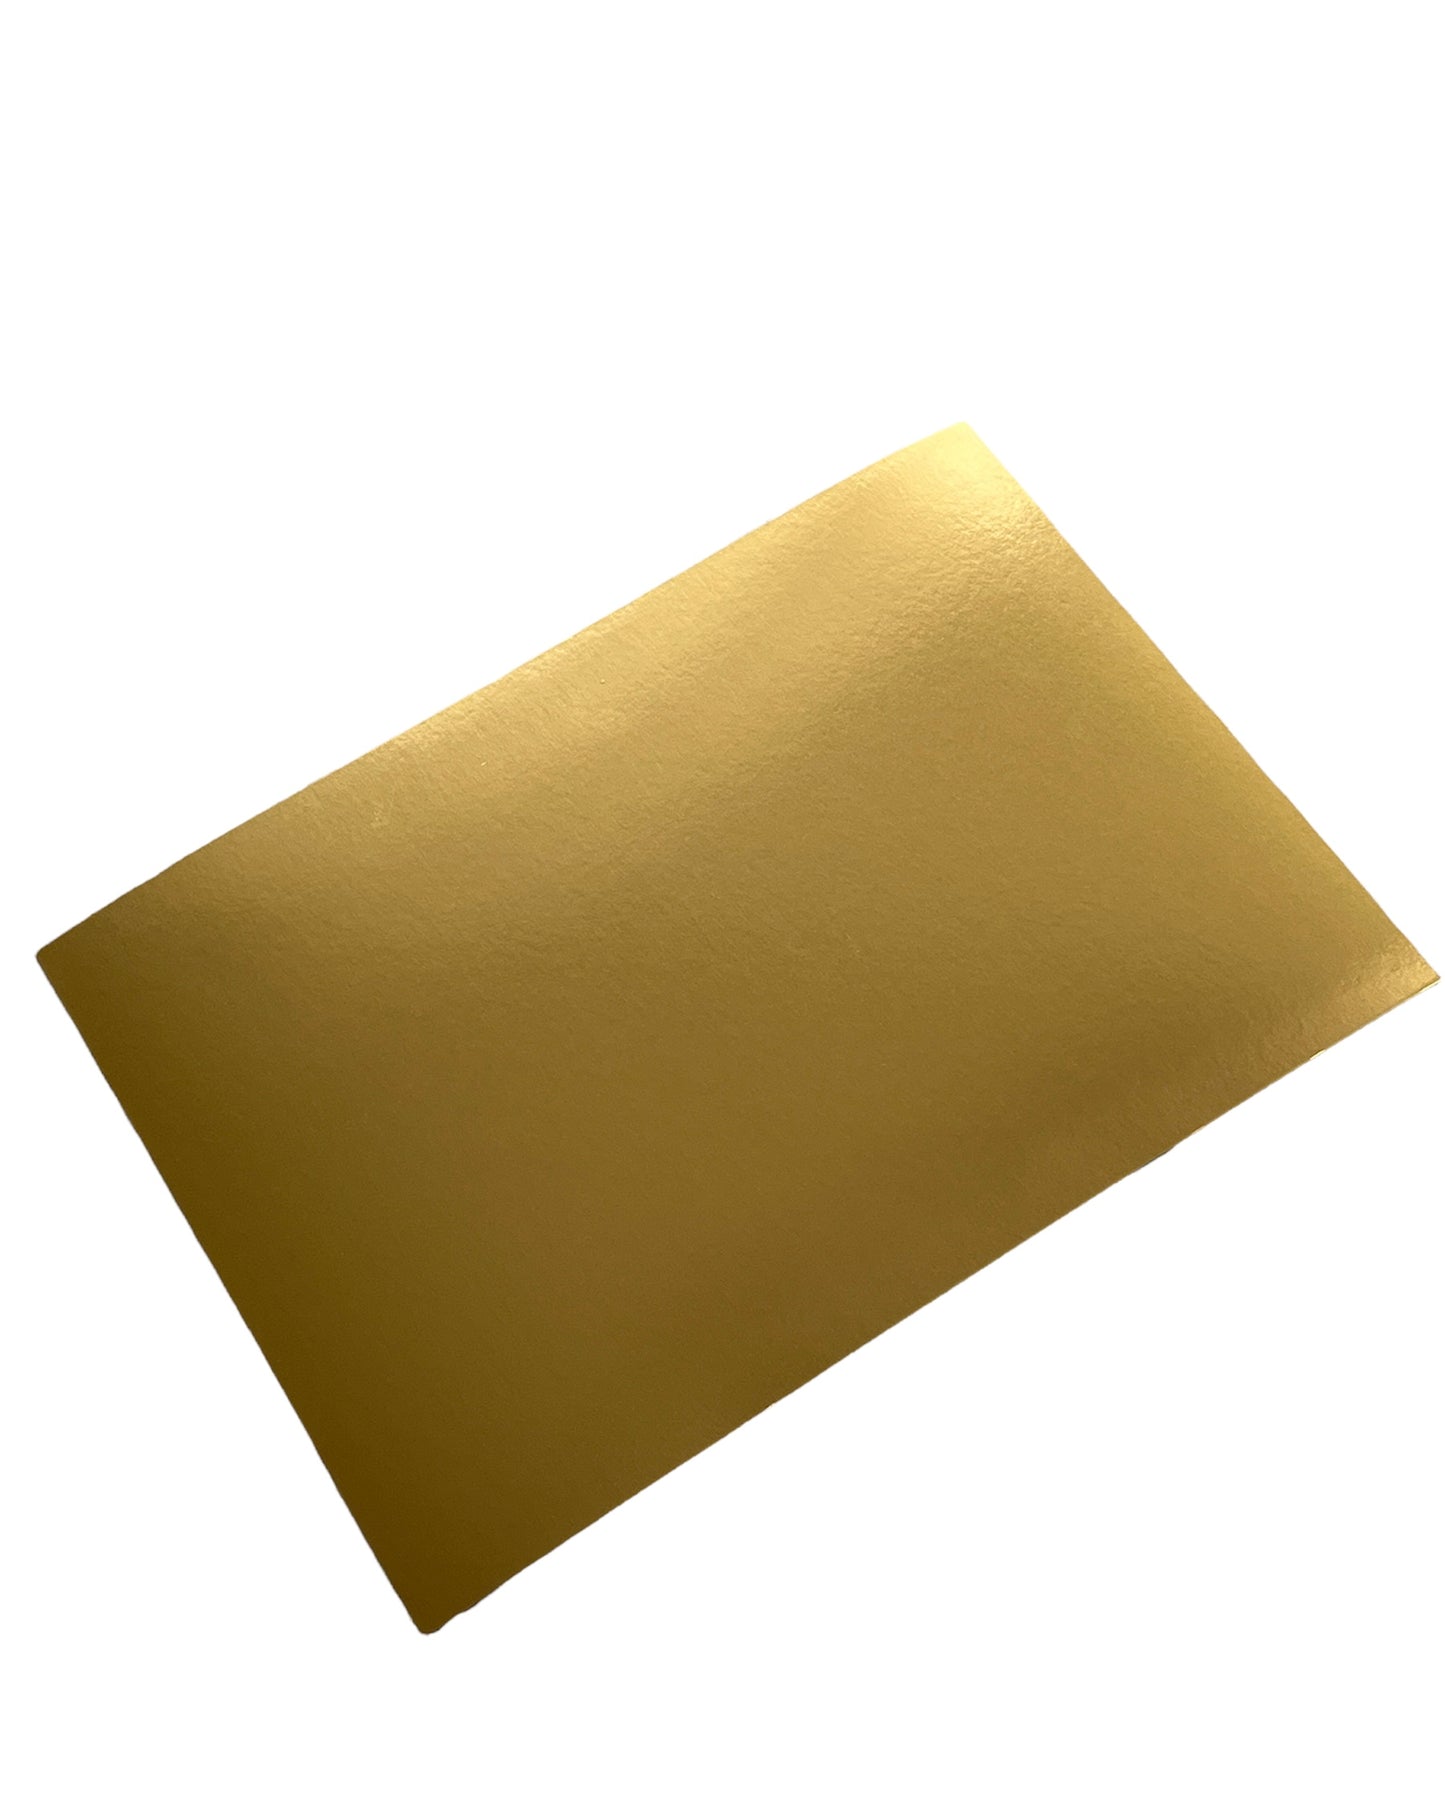 YELLOW GOLD GLOSS - 280 GSM - Rainbow Card